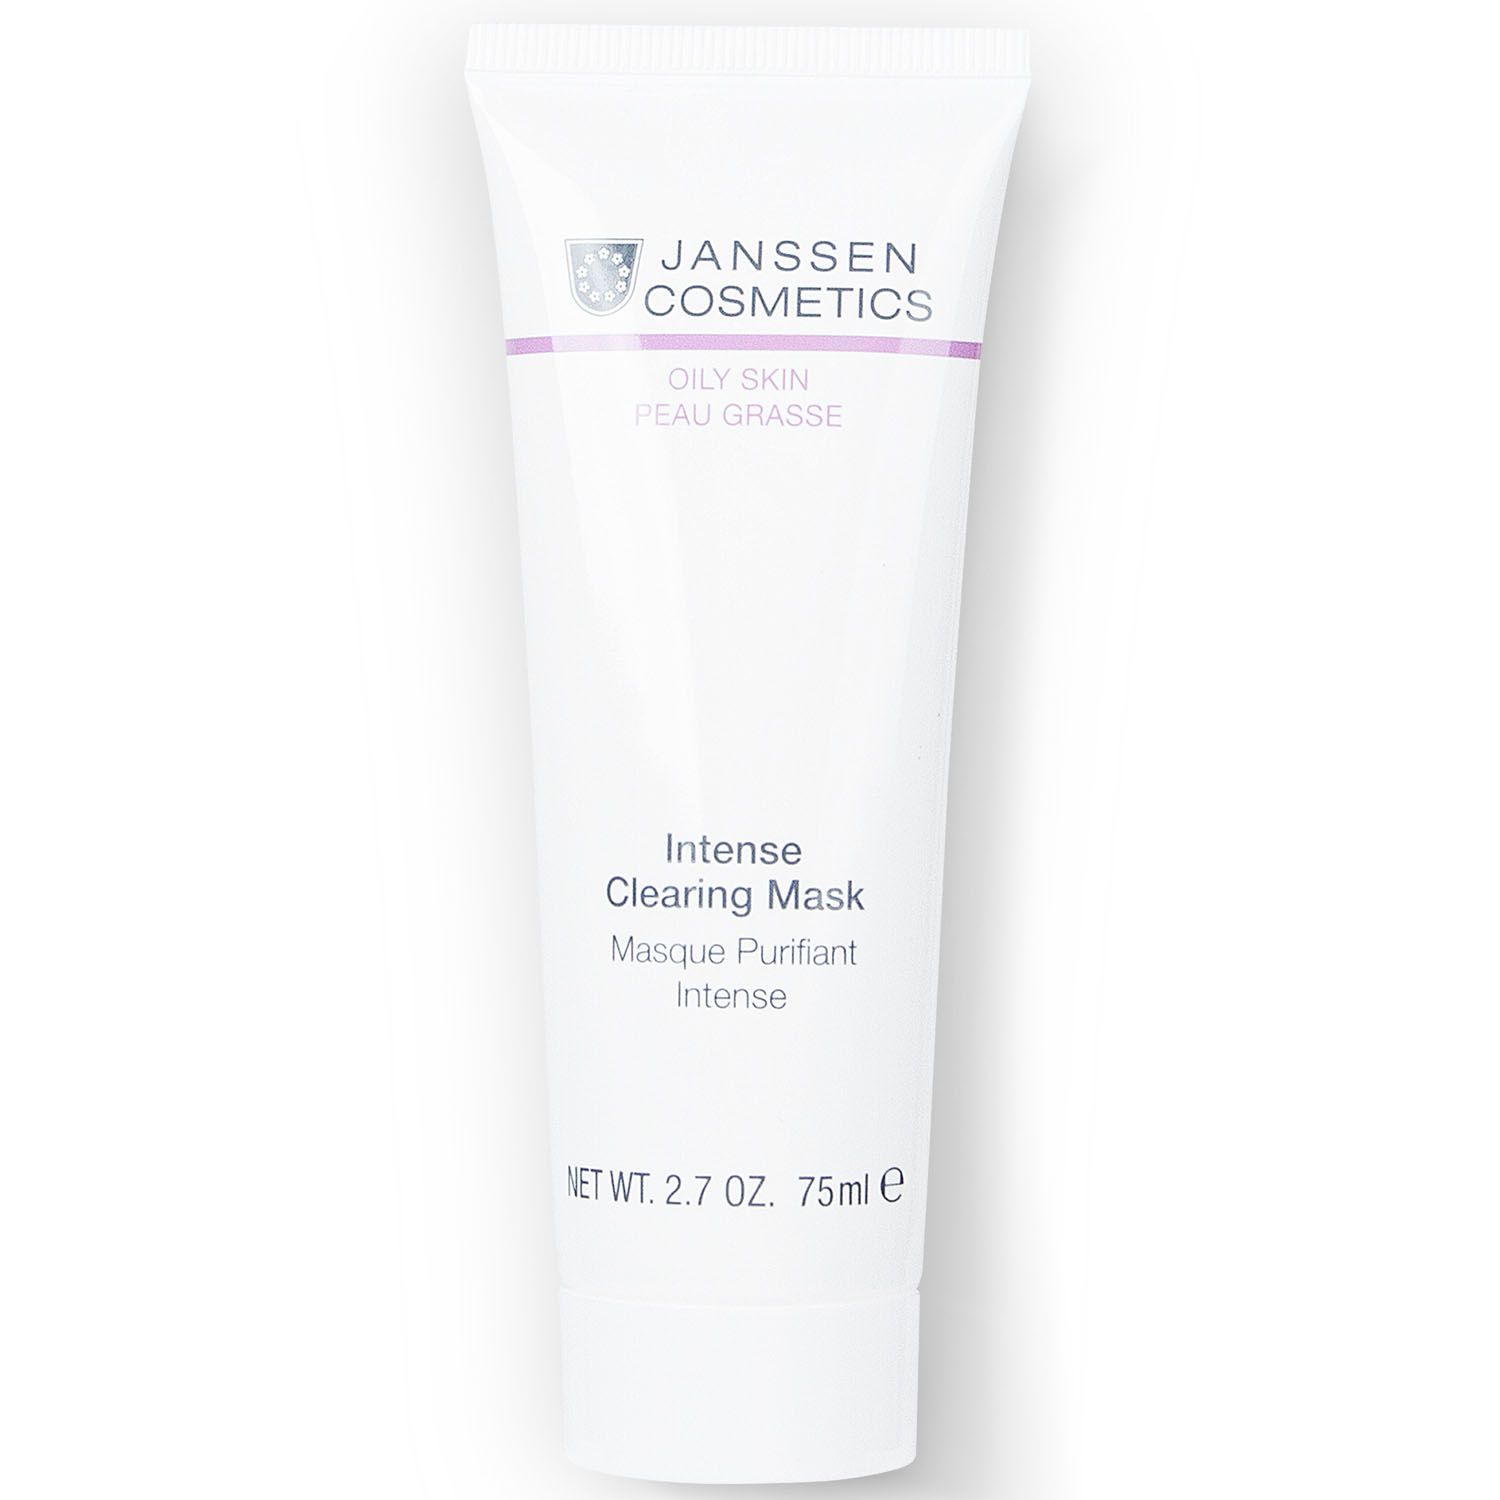 Janssen Cosmetics Интенсивно очищающая маска Intense Clearing Mask, 75 мл (Janssen Cosmetics, Oily skin) janssen cosmetics intense clearing mask интенсивно очищающая маска 75 мл